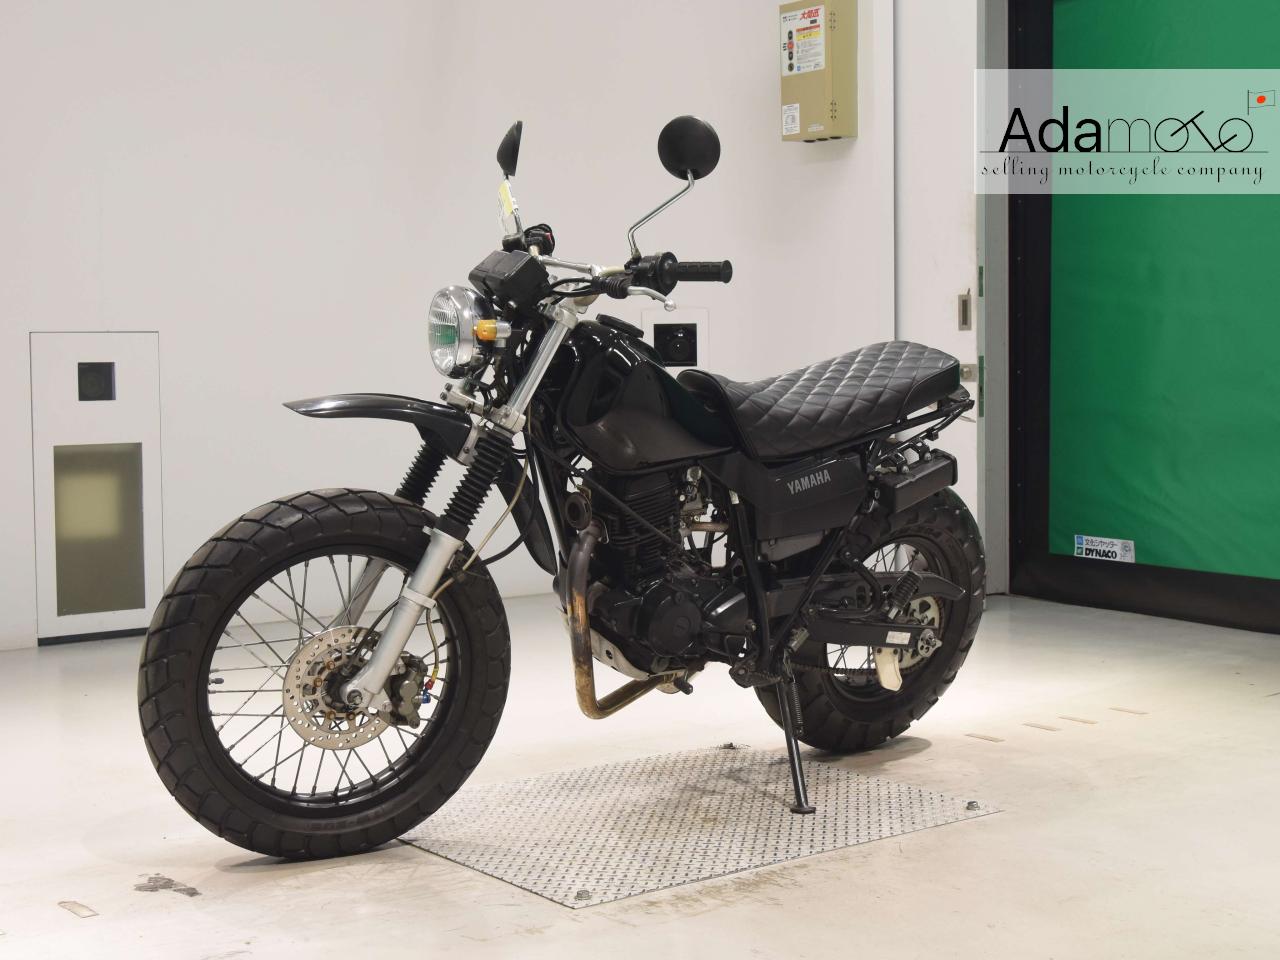 Yamaha TW200 2 - Adamoto - Motorcycles from Japan